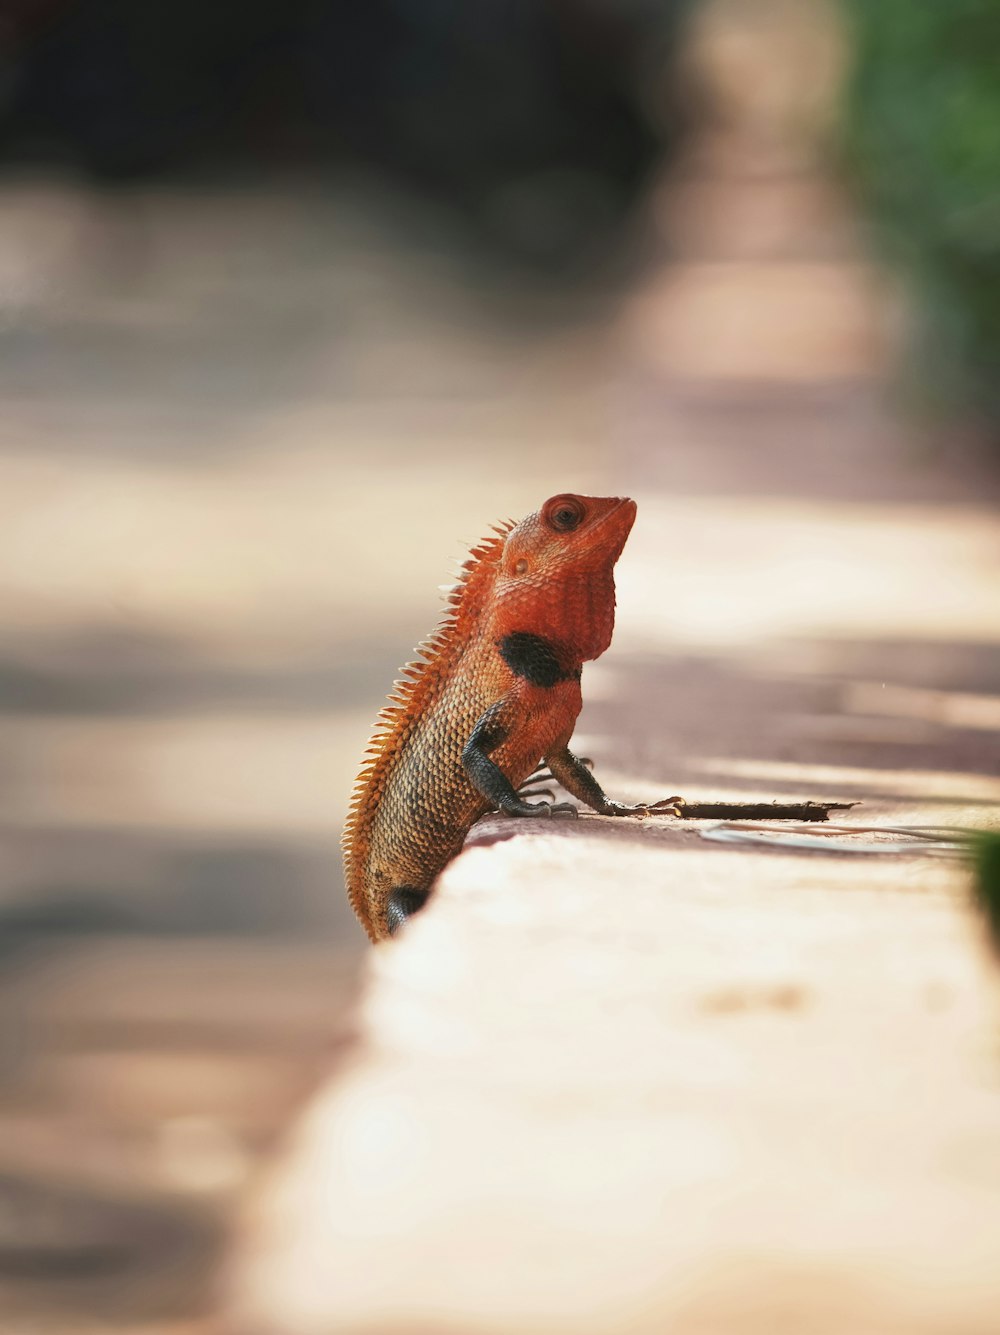 an orange and black lizard sitting on a ledge